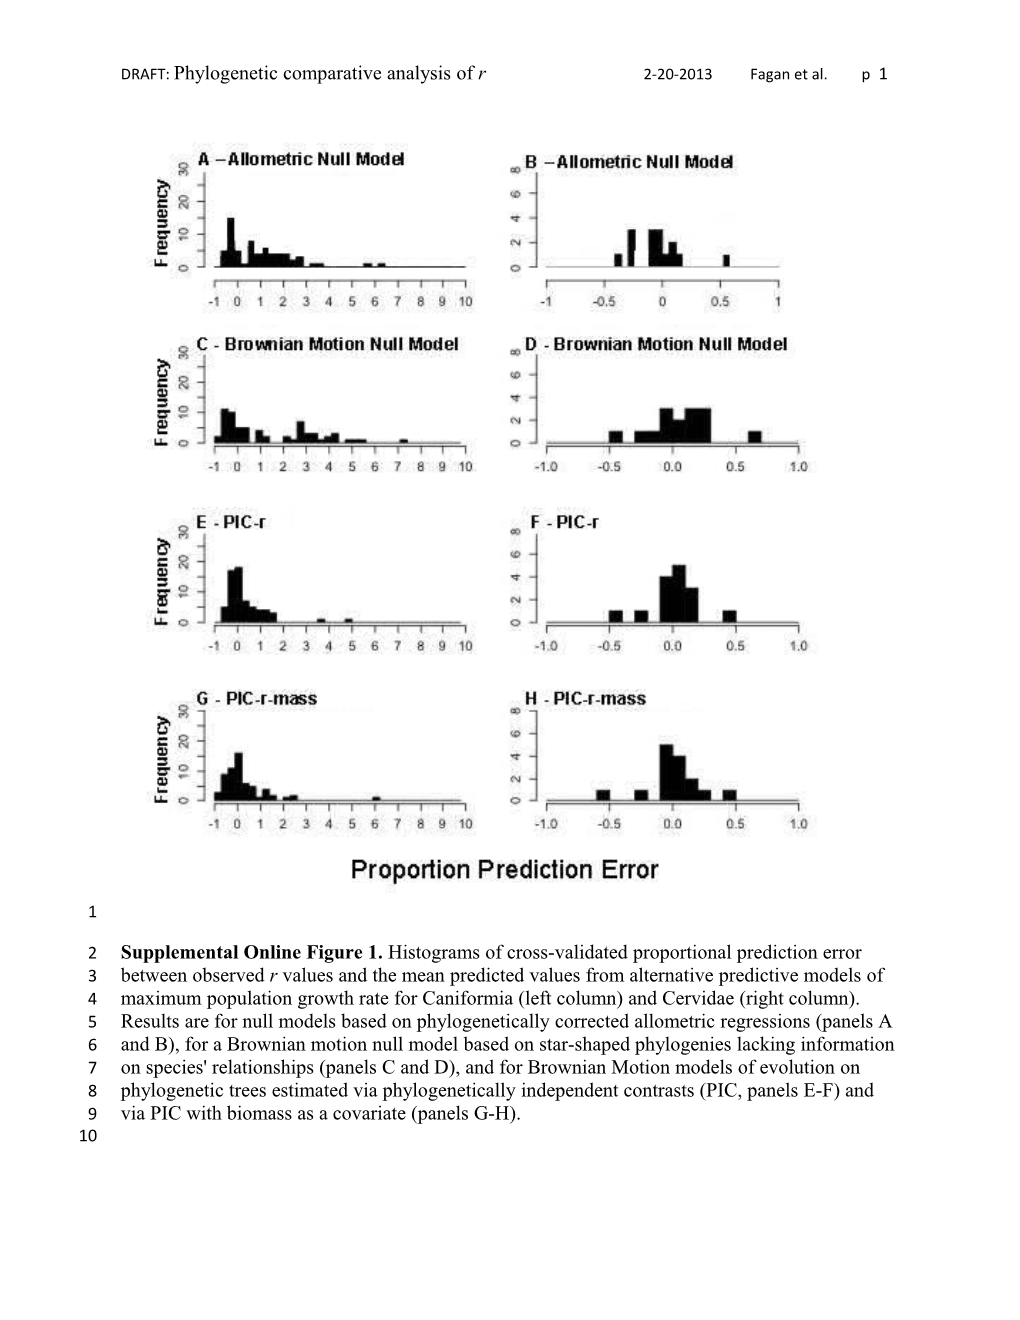 DRAFT: Phylogeneticcomparative Analysis Ofr 2-20-2013 Fagan Et Al. P 1